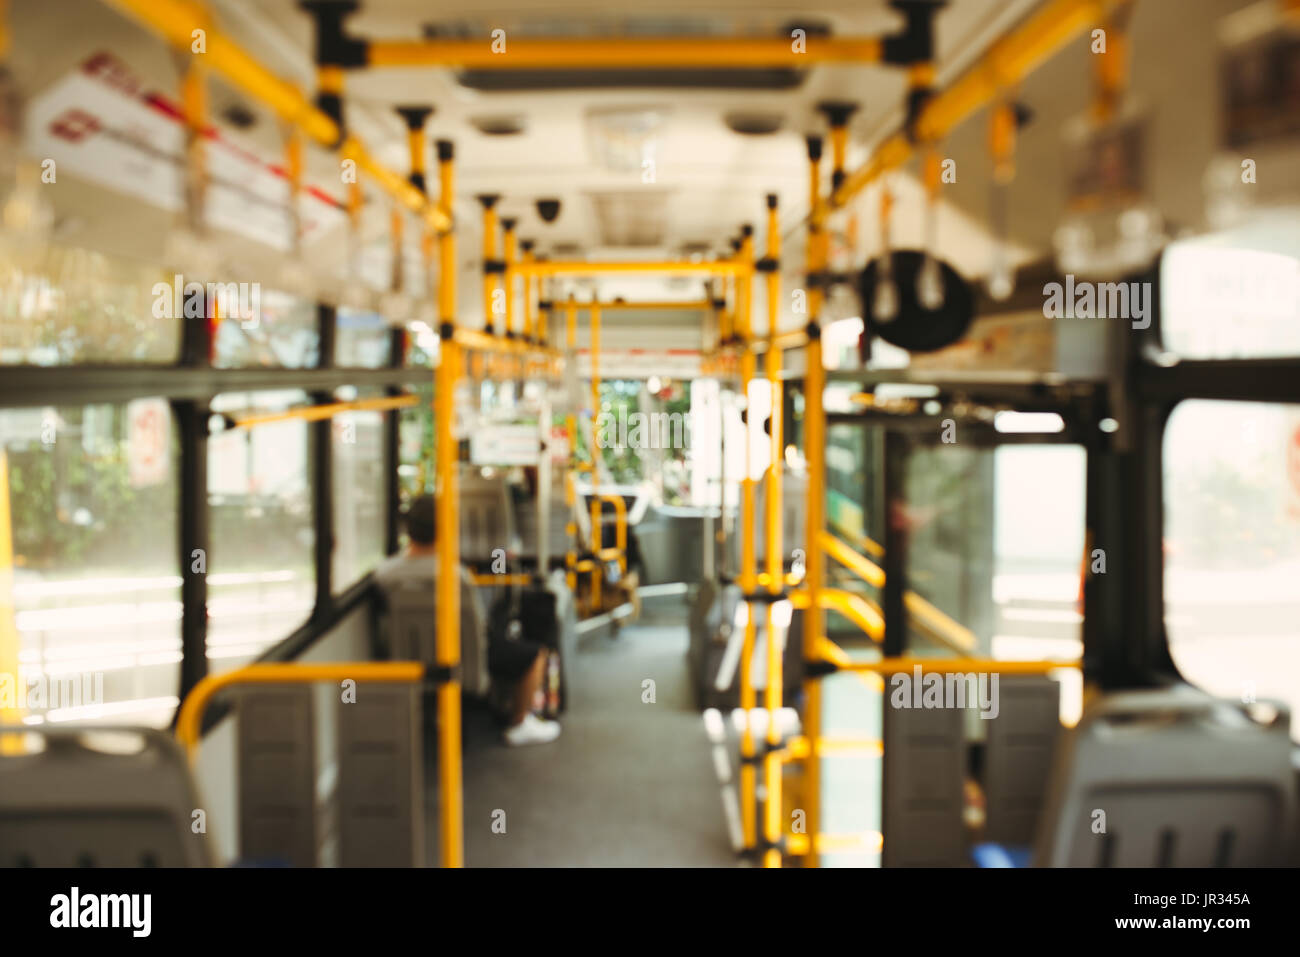 Public transportation. Blur image of interior of modern city bus Stock Photo